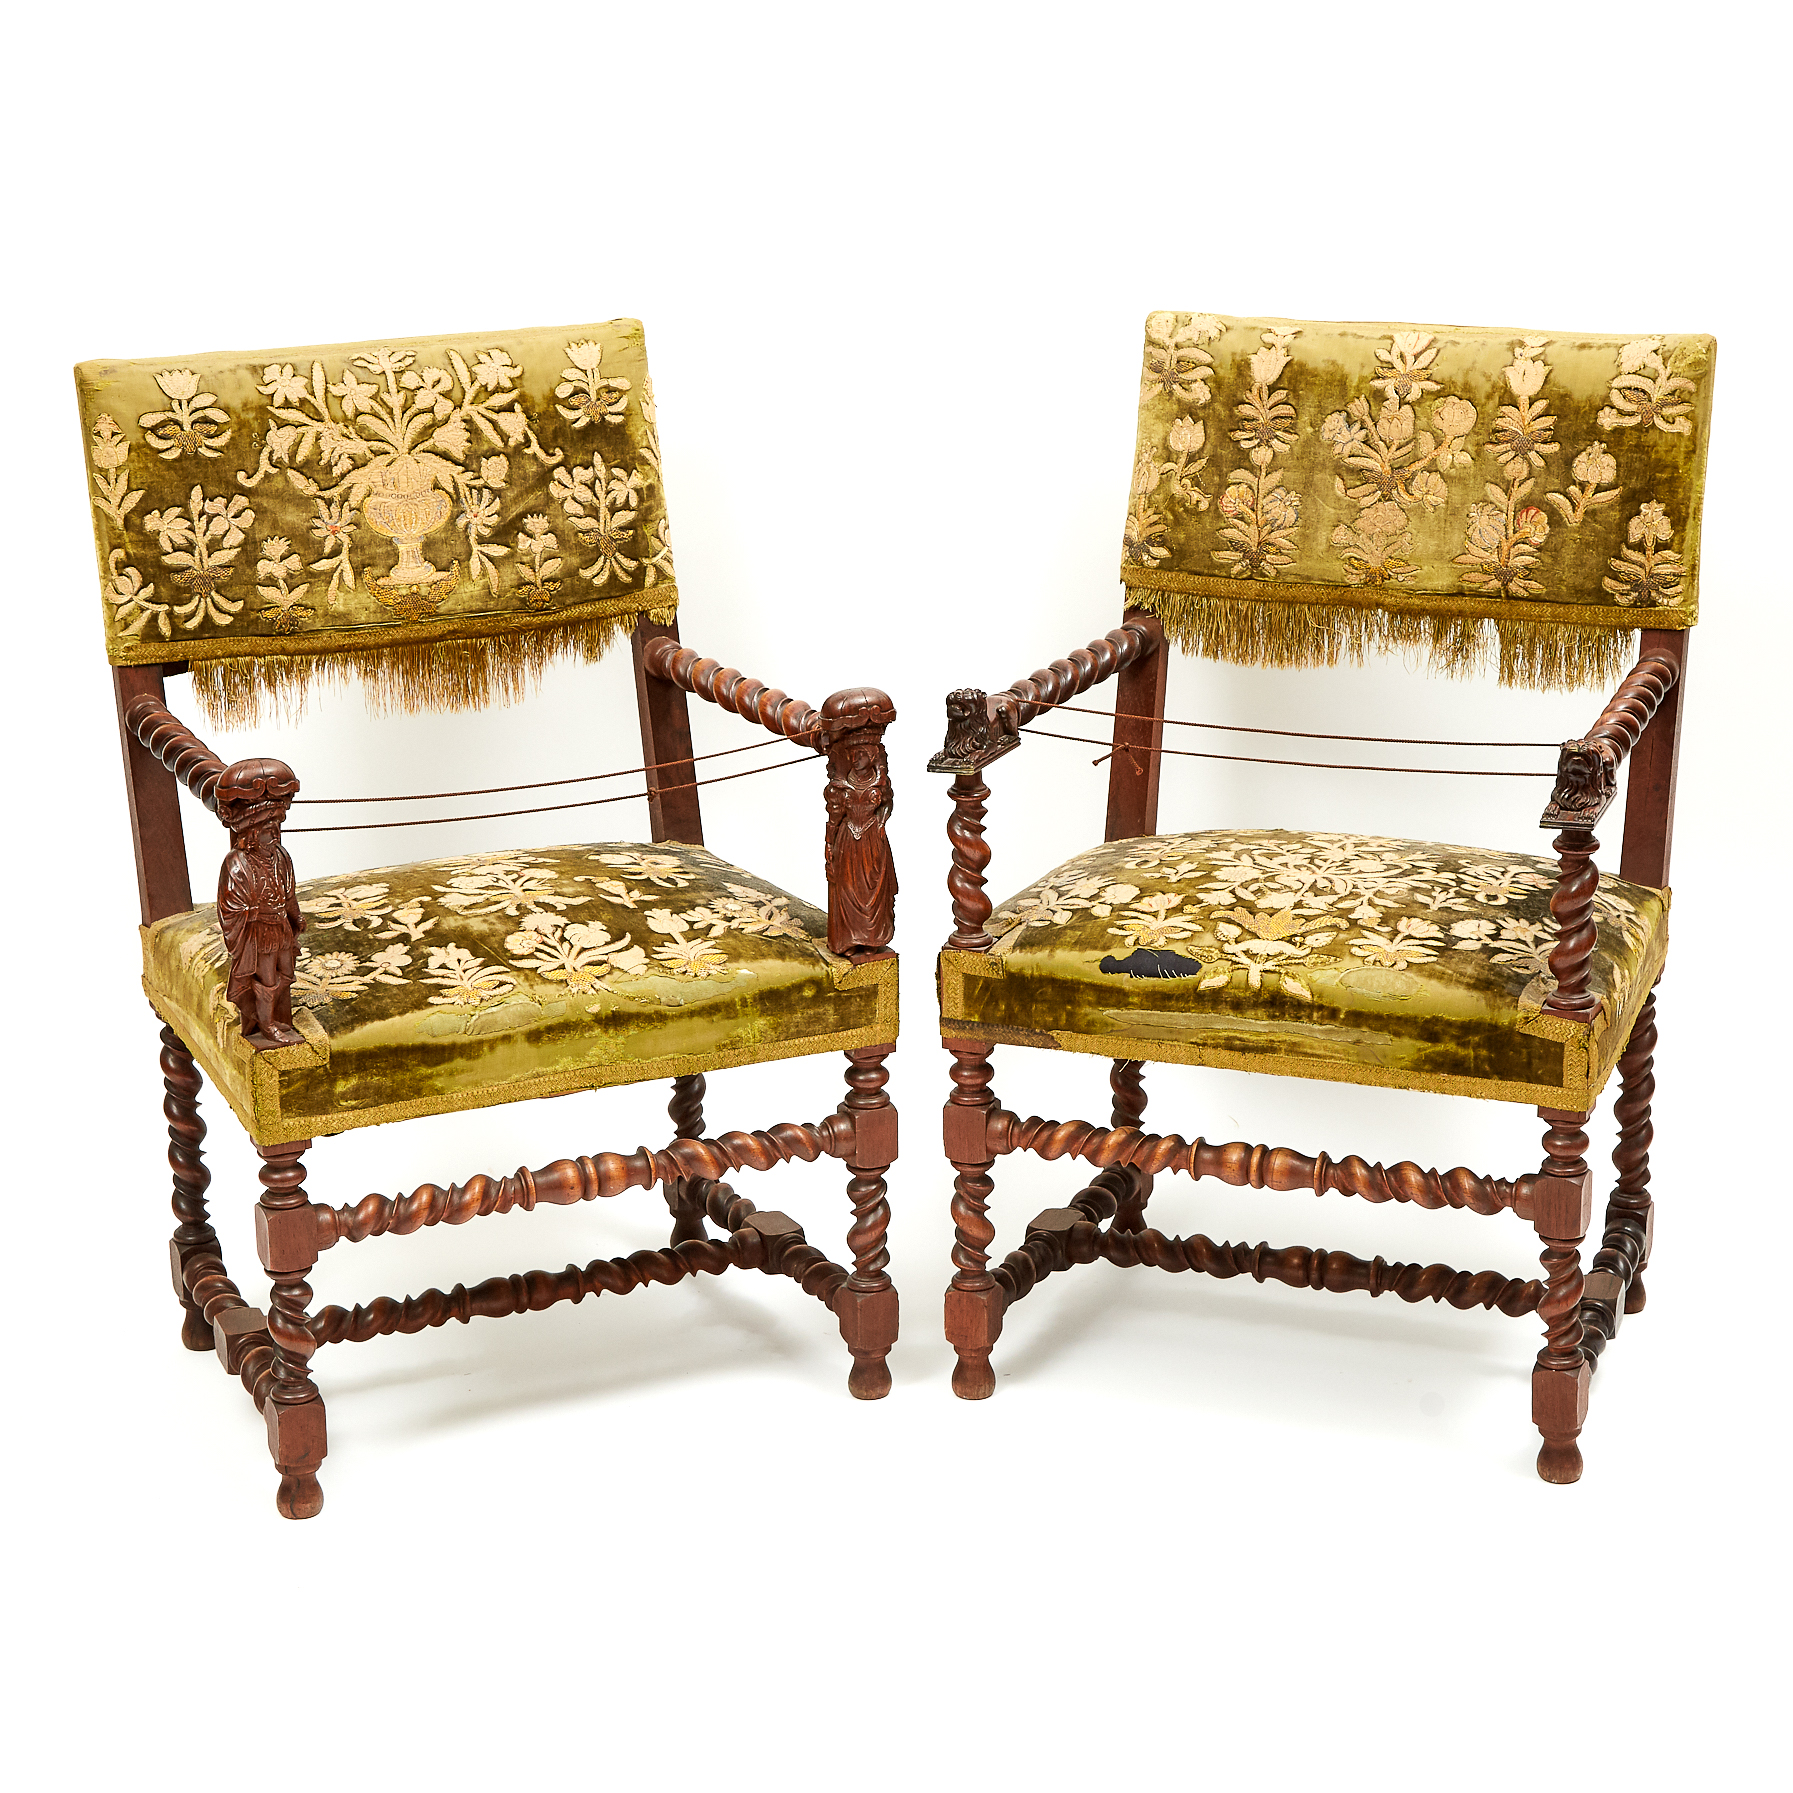 Pair of Jacobean Style Barley Twist Open Armchairs, 19th century